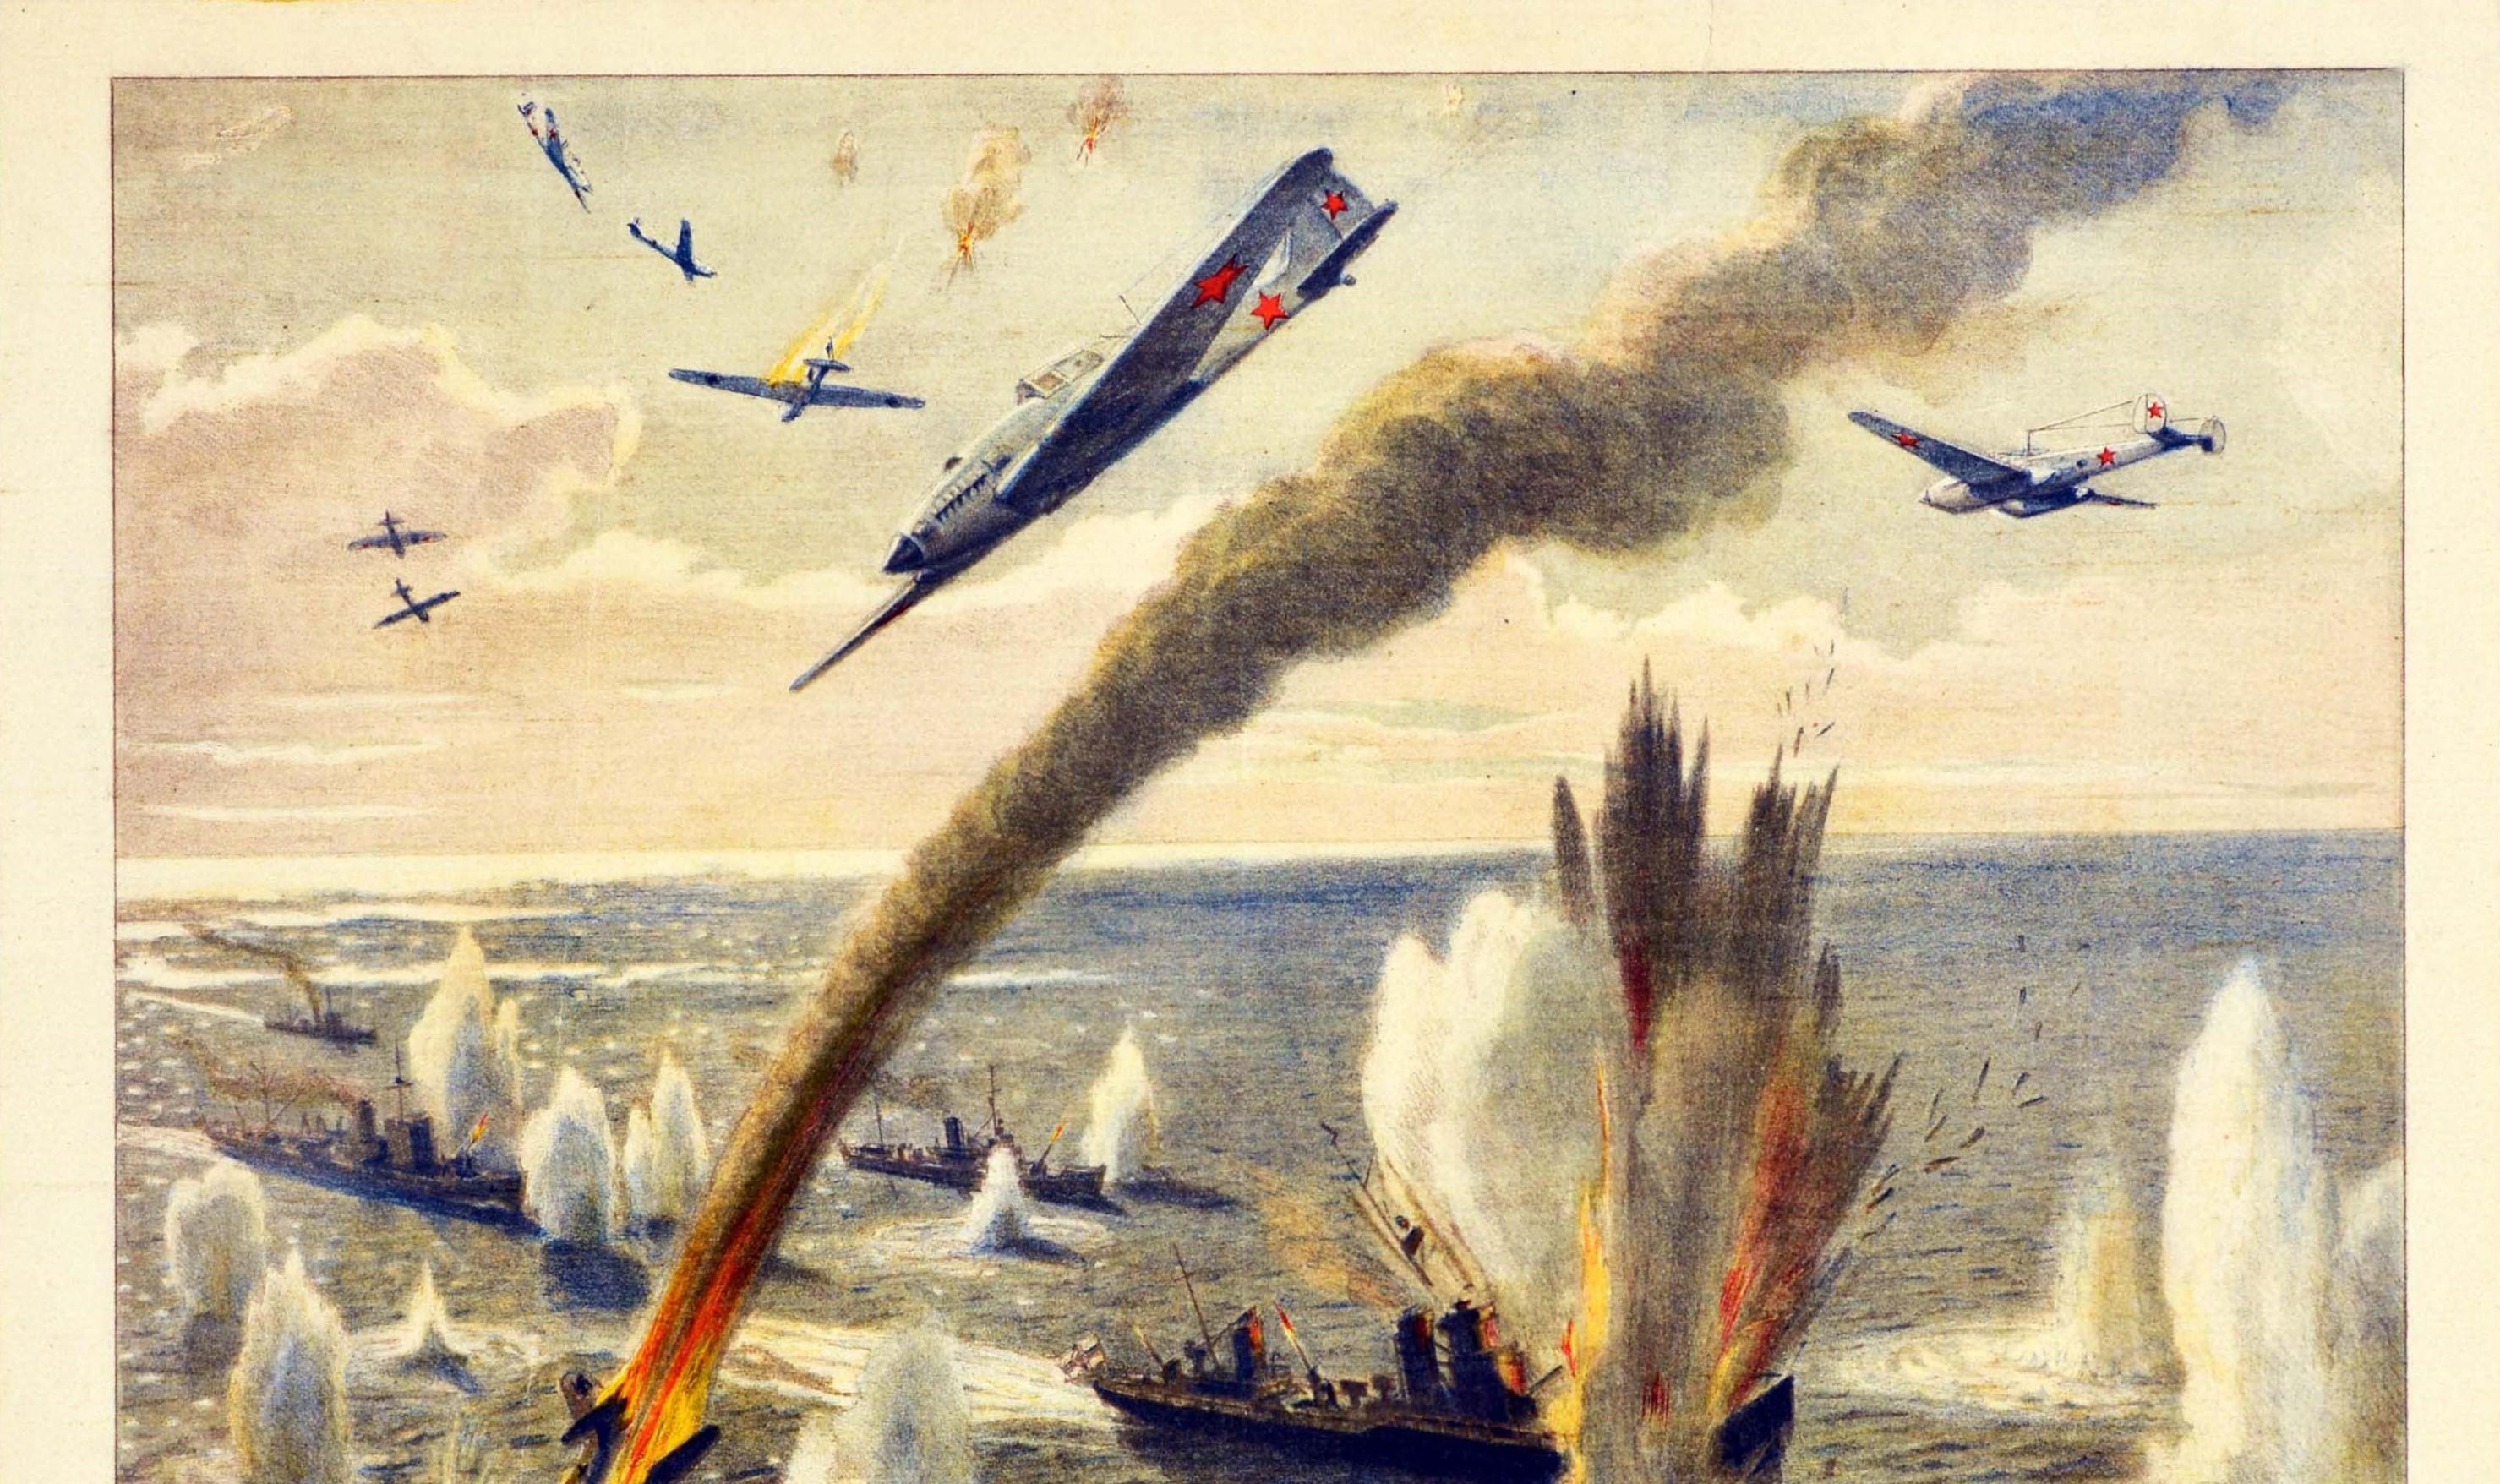 Original Vintage WWII Poster Soviet Baltic Pilots Fighter Jets Ships Sea Battle - Print by A Treskin